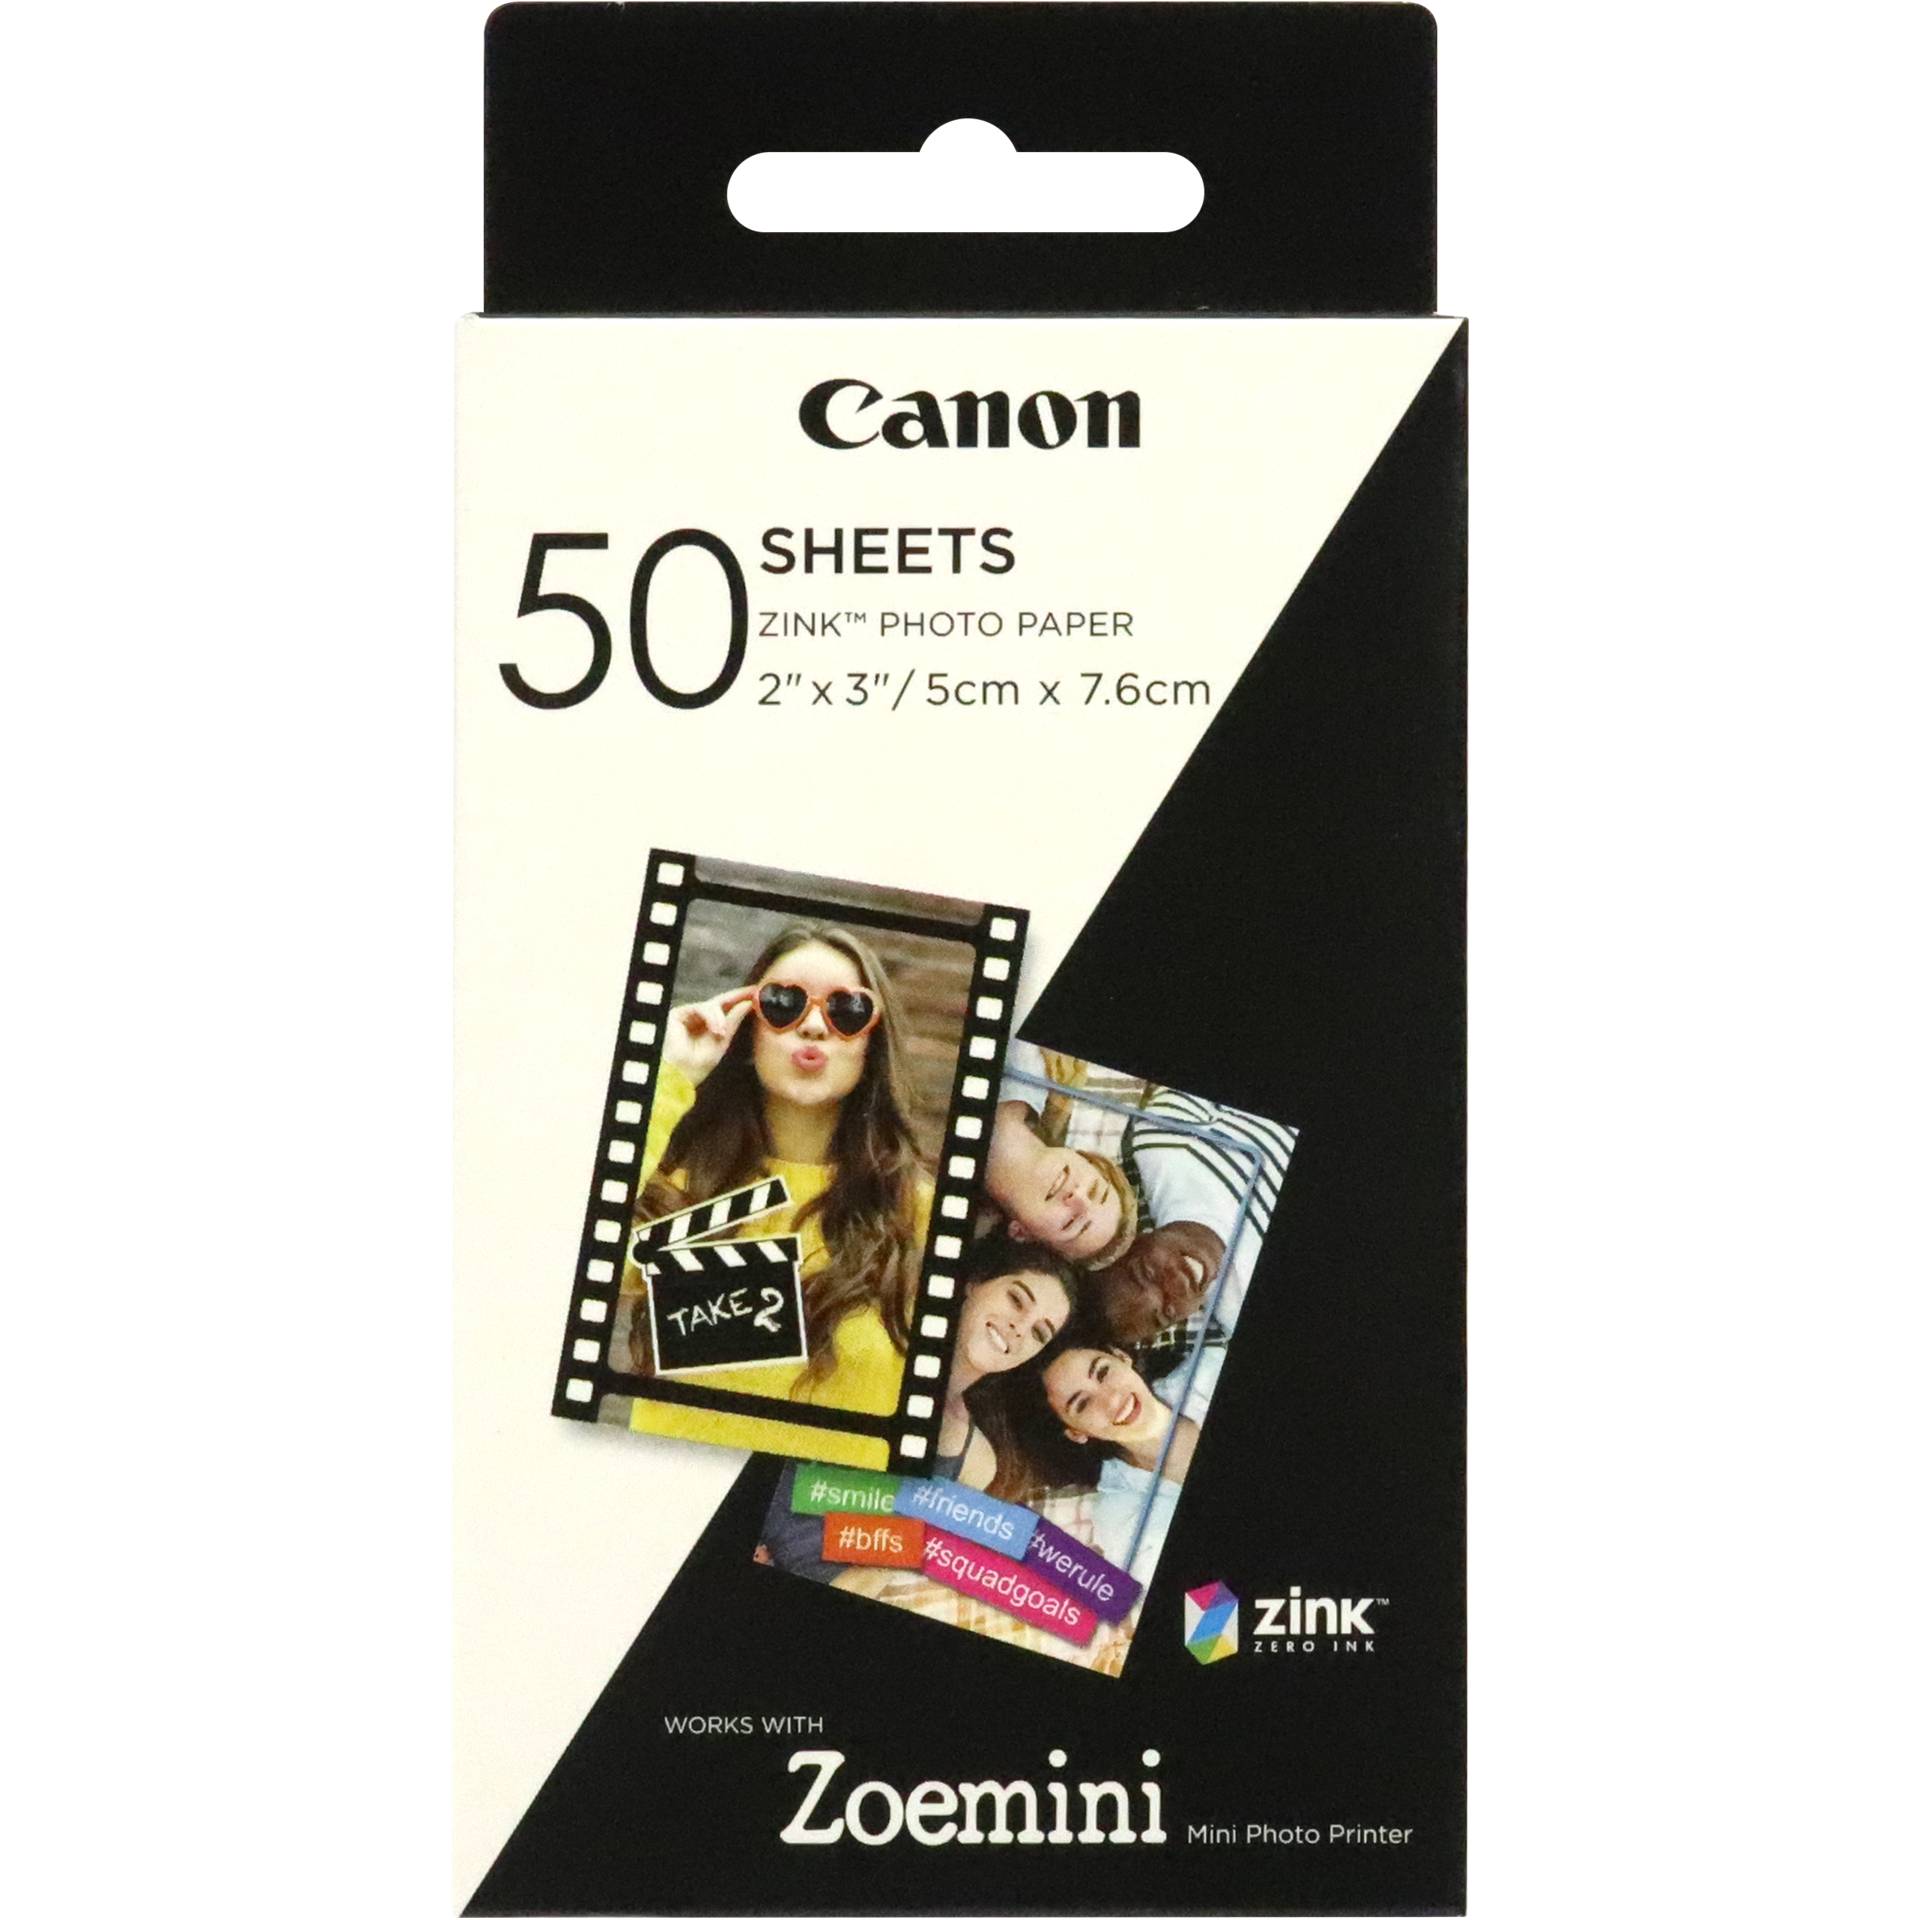 Canon ZINK ZP-2030 2x3 Photo Paper, 50 Blatt 